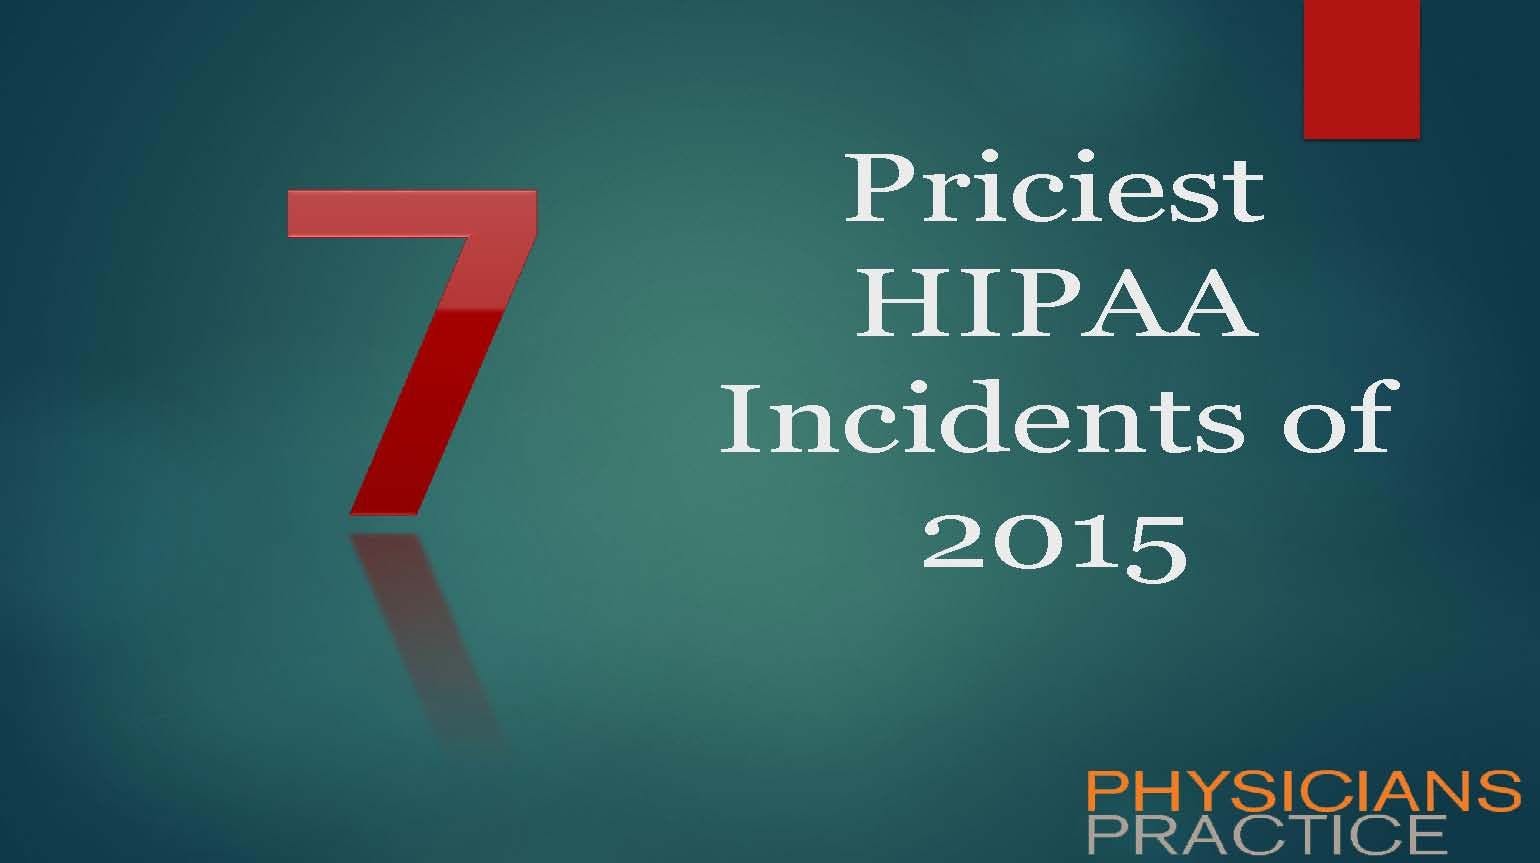 7 Priciest HIPAA Incidents of 2015